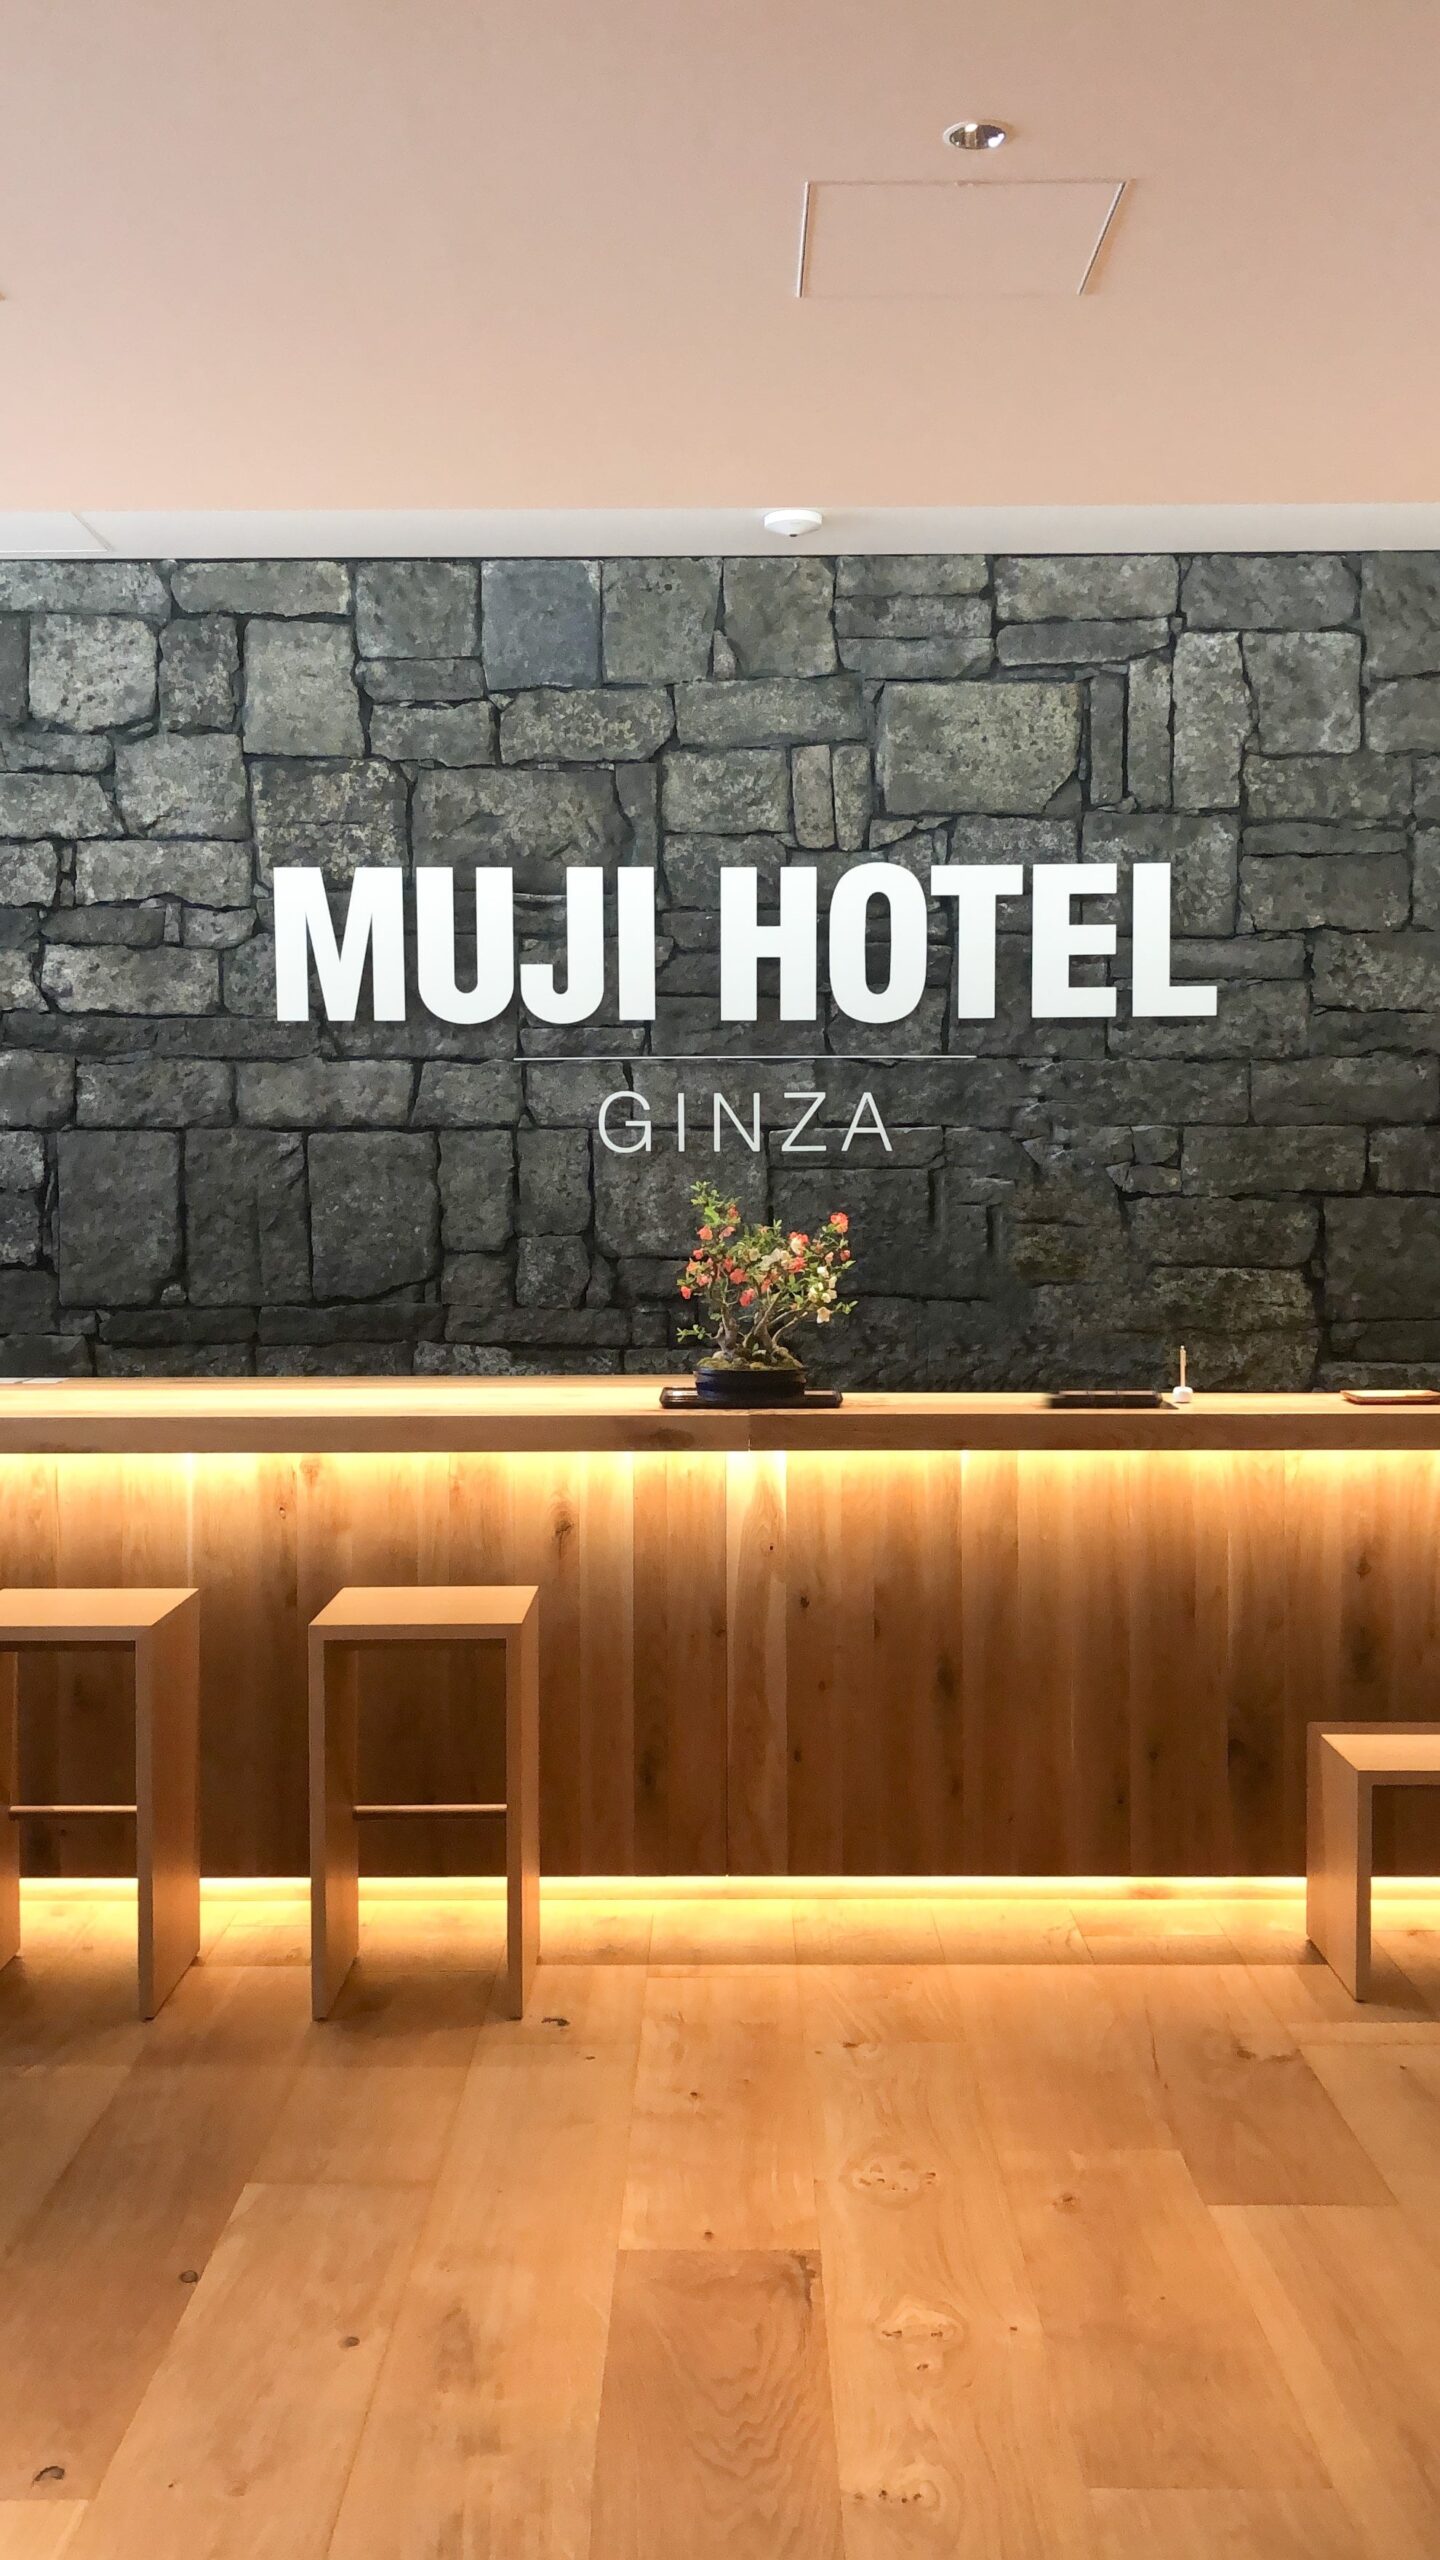  Stay at Muji Hotel Ginza